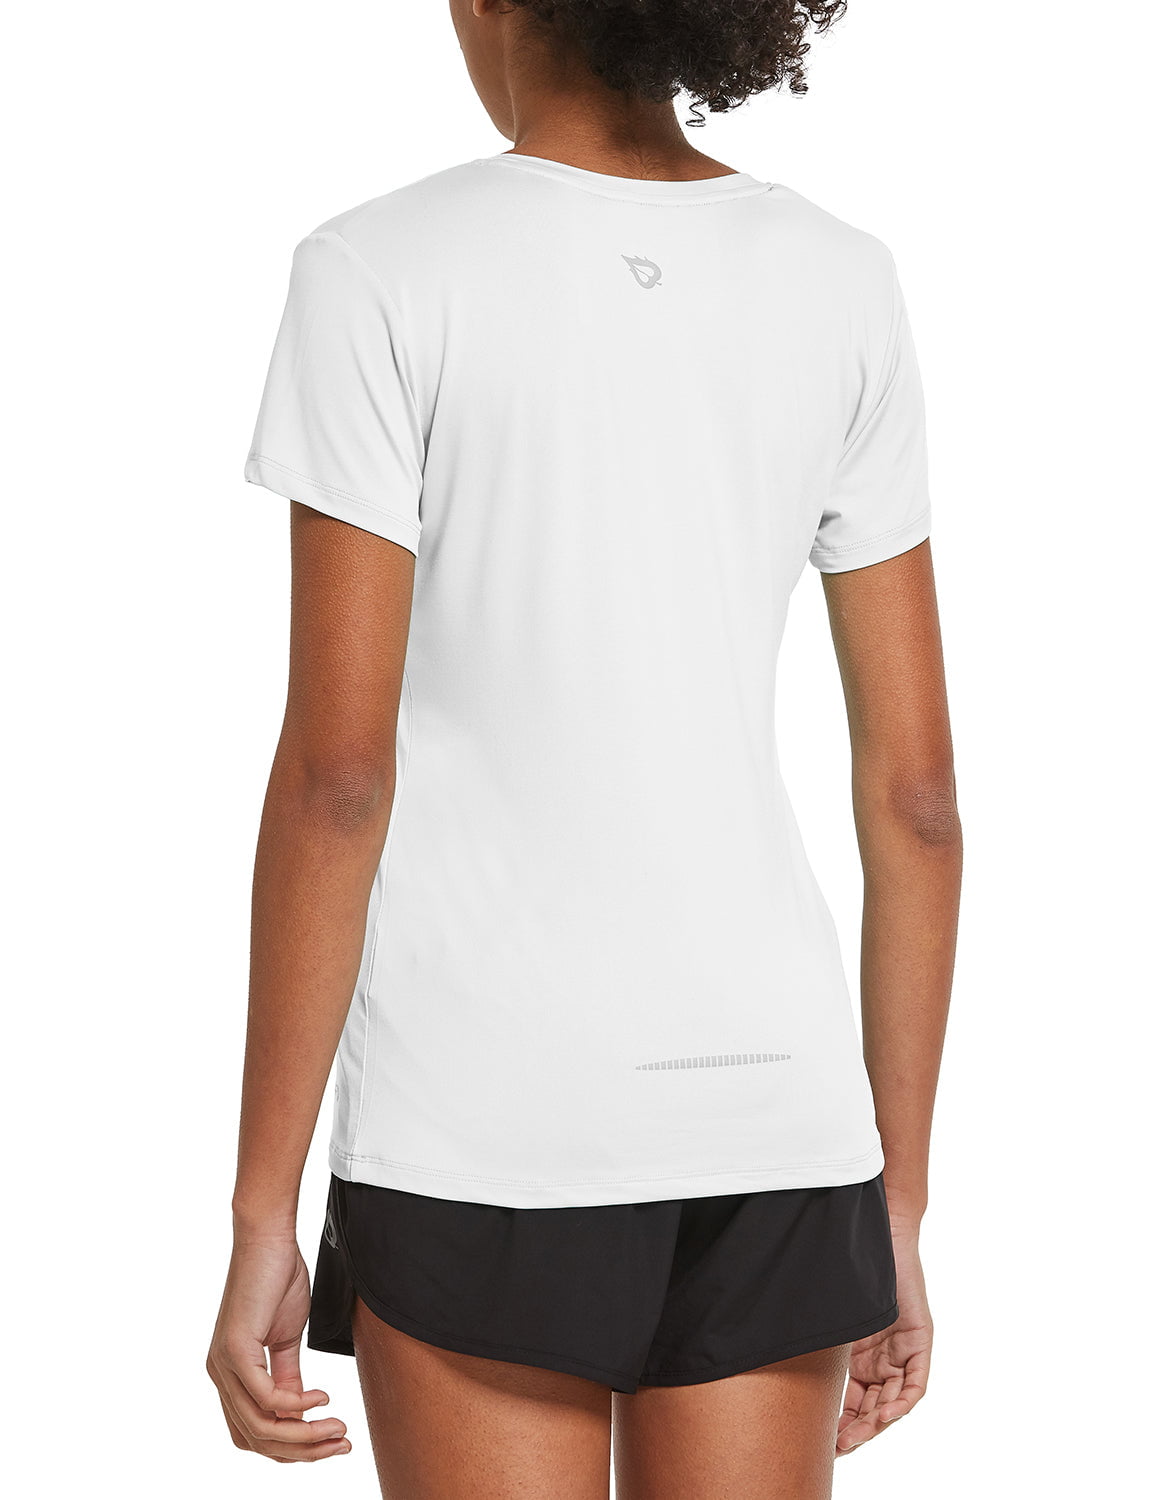 BALEAF Women's Athletic Shirt Workout Top Running Yoga Lightweight Quick Dry Short-Sleeved Crewneck Tee 